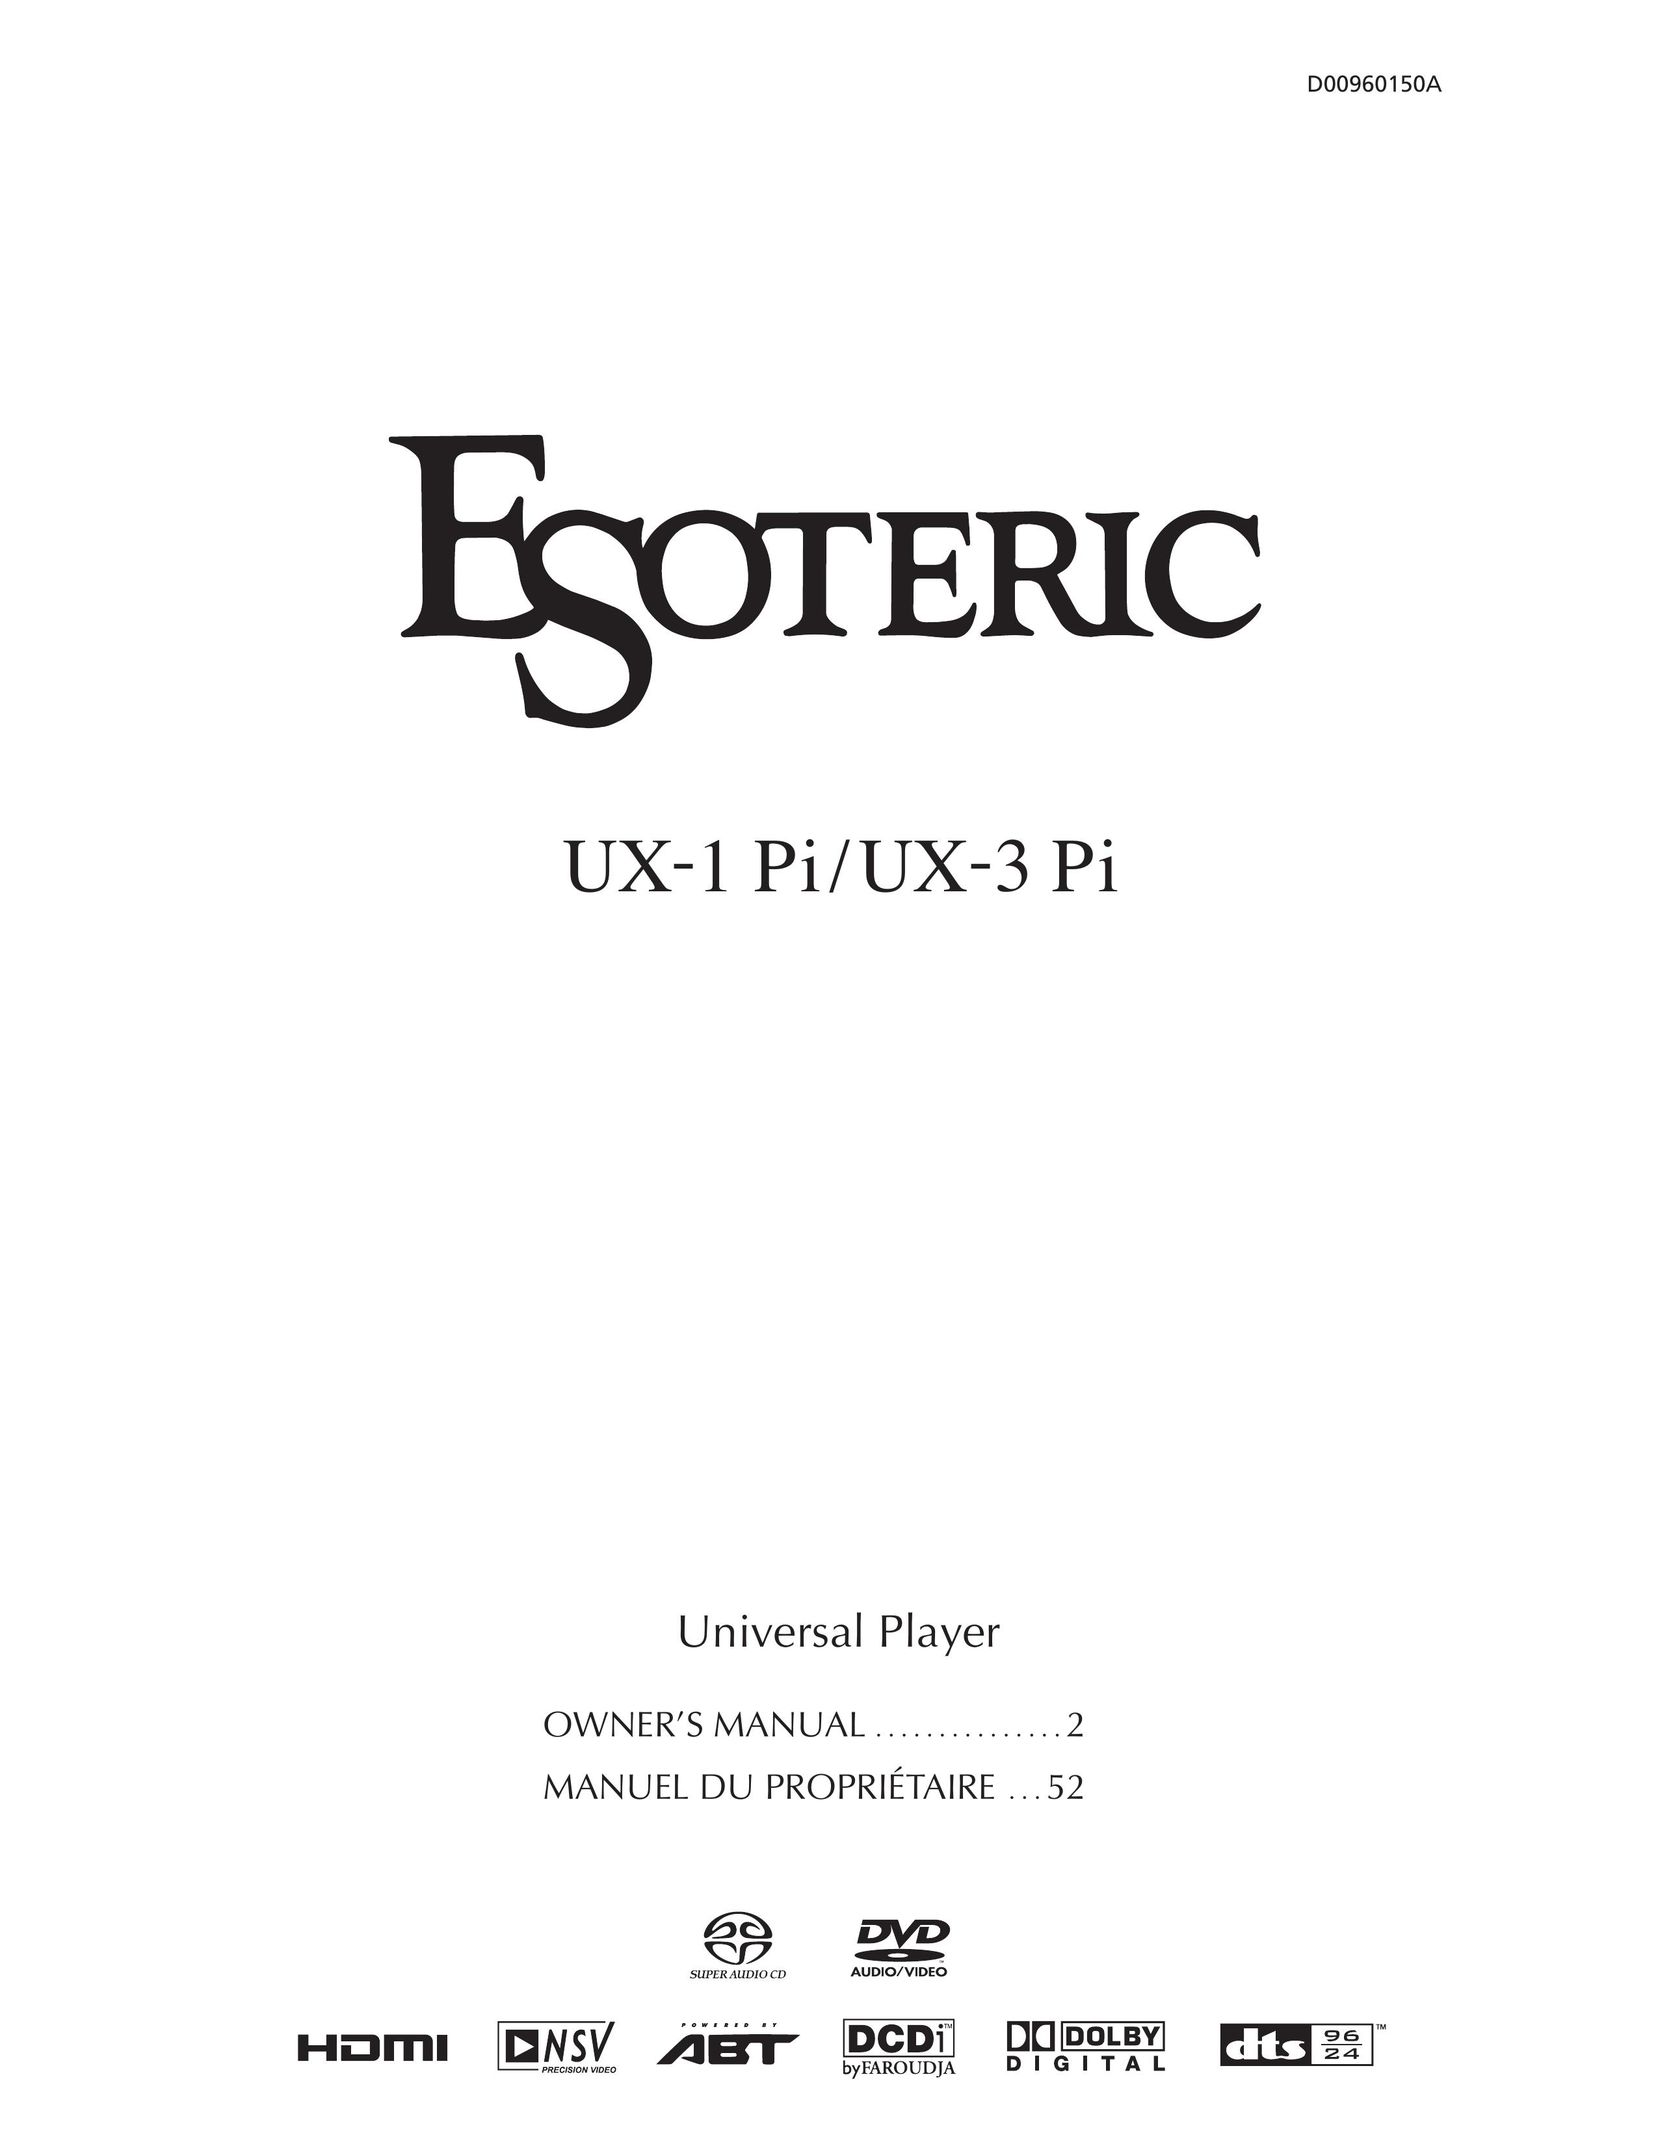 Esoteric UX-1 Pi TV DVD Combo User Manual